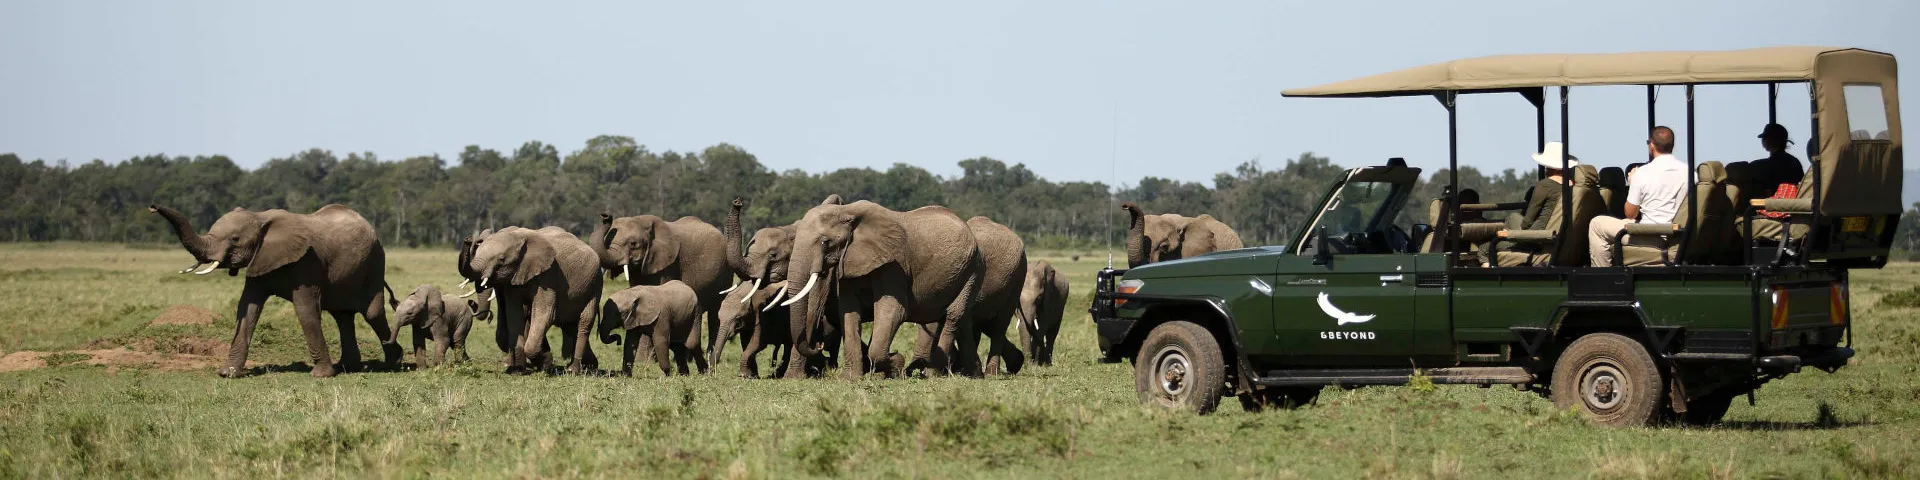 Elephant Sighting on 7 Day Kenyan Adventure Tour